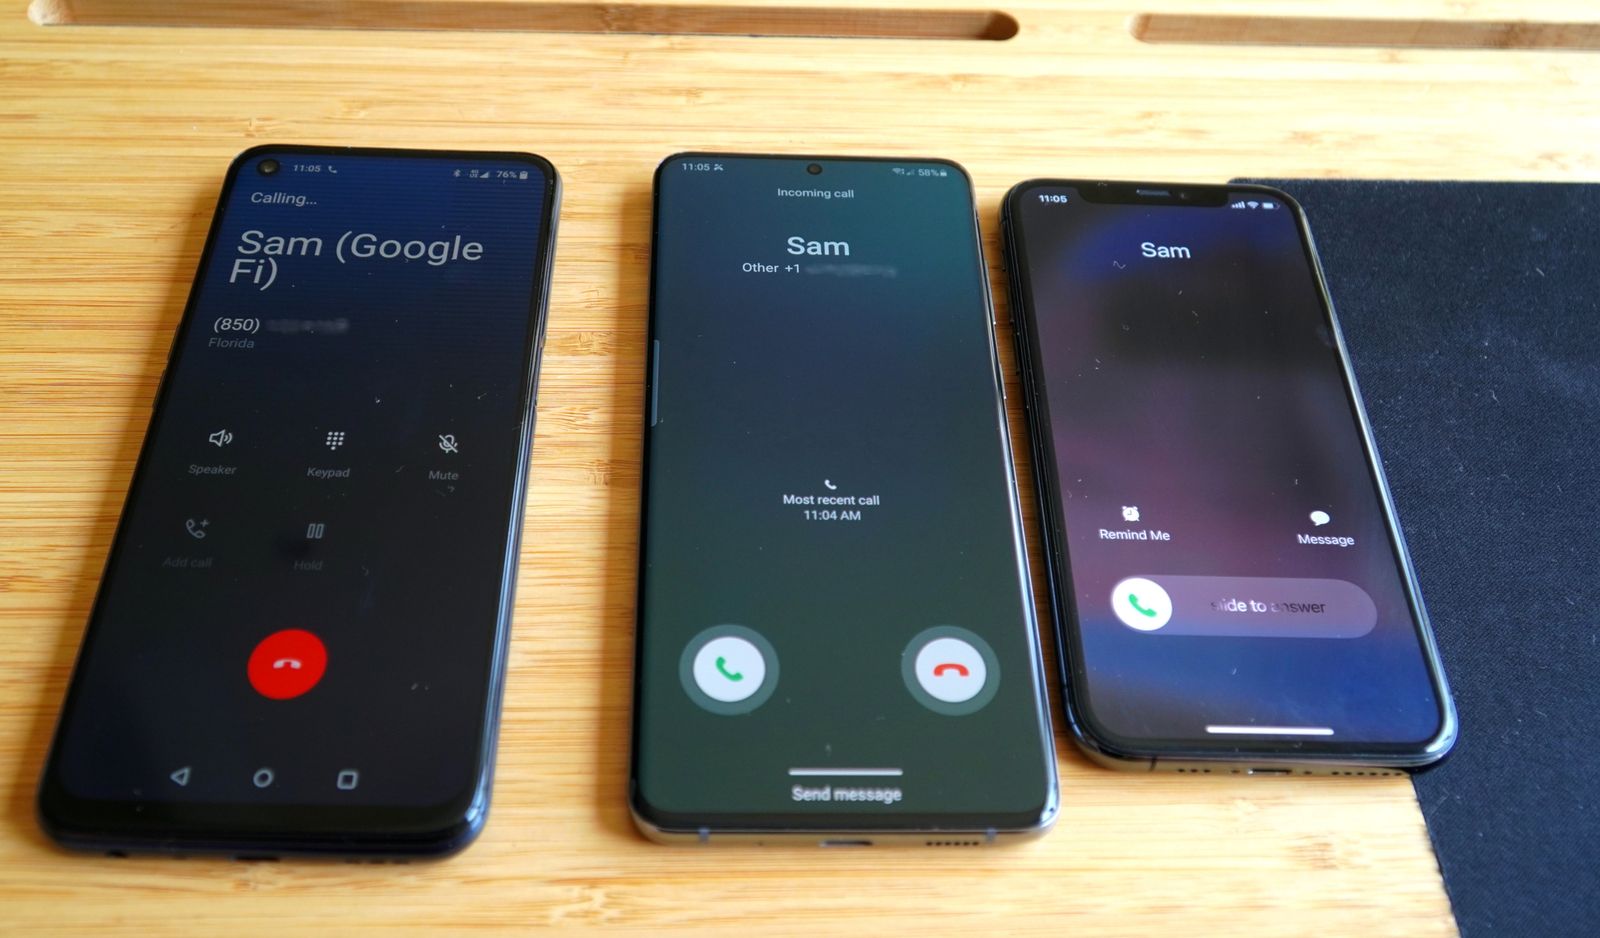 A Google Fi phone forwards a call to an iPhone